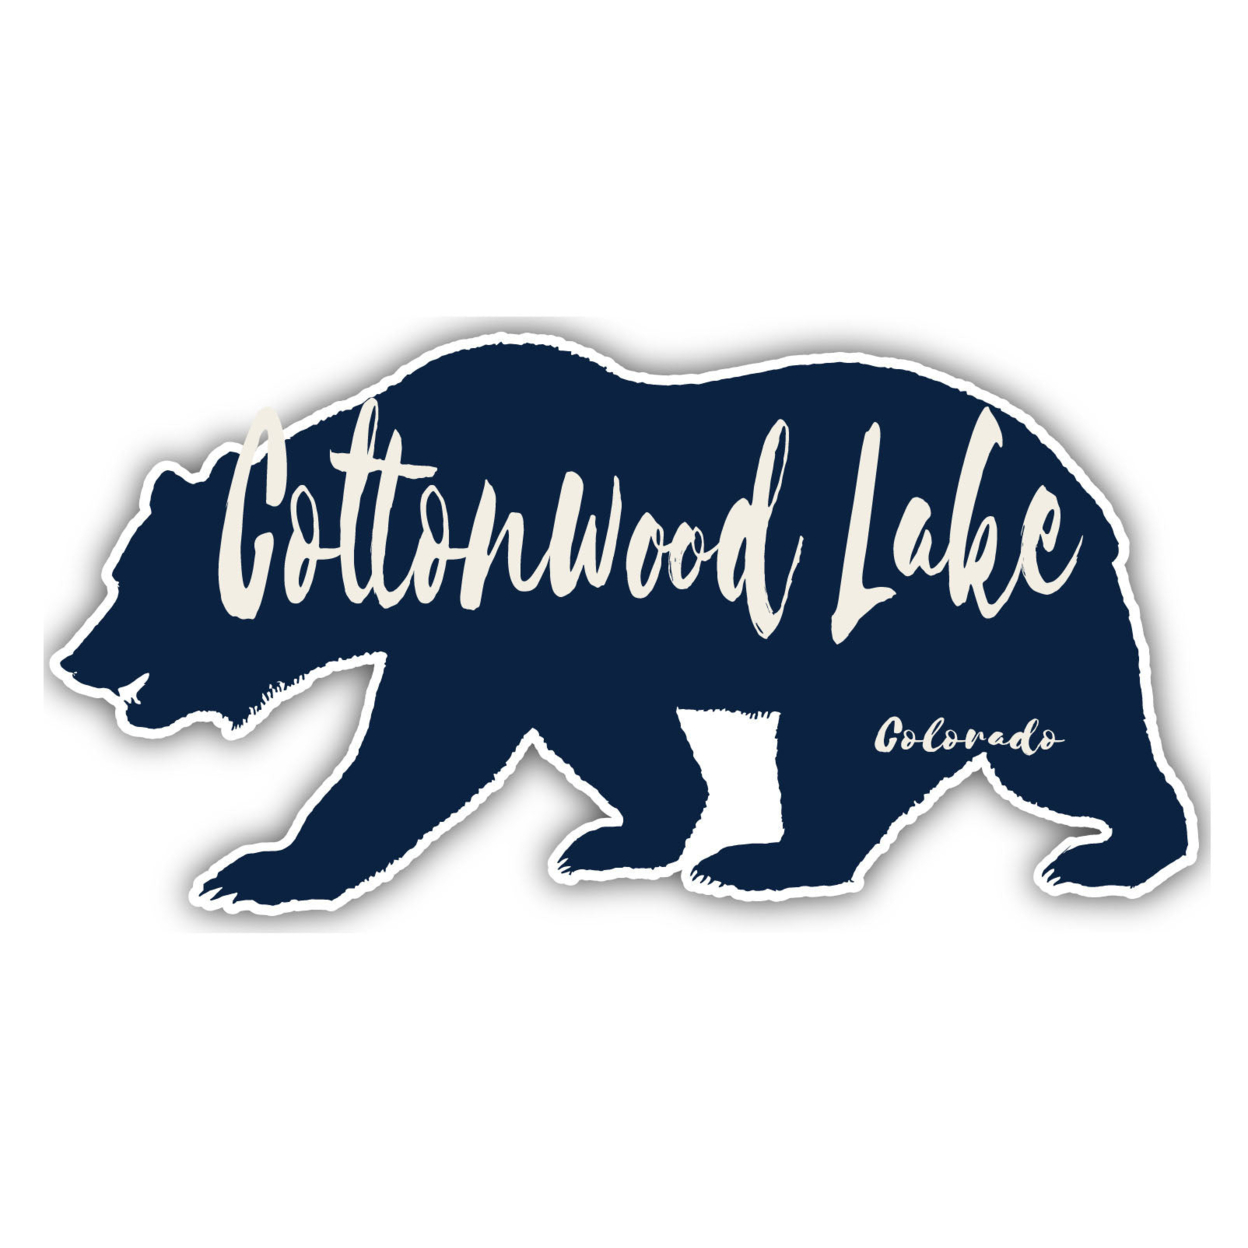 Cottonwood Lake Colorado Souvenir Decorative Stickers (Choose Theme And Size) - 4-Pack, 4-Inch, Bear